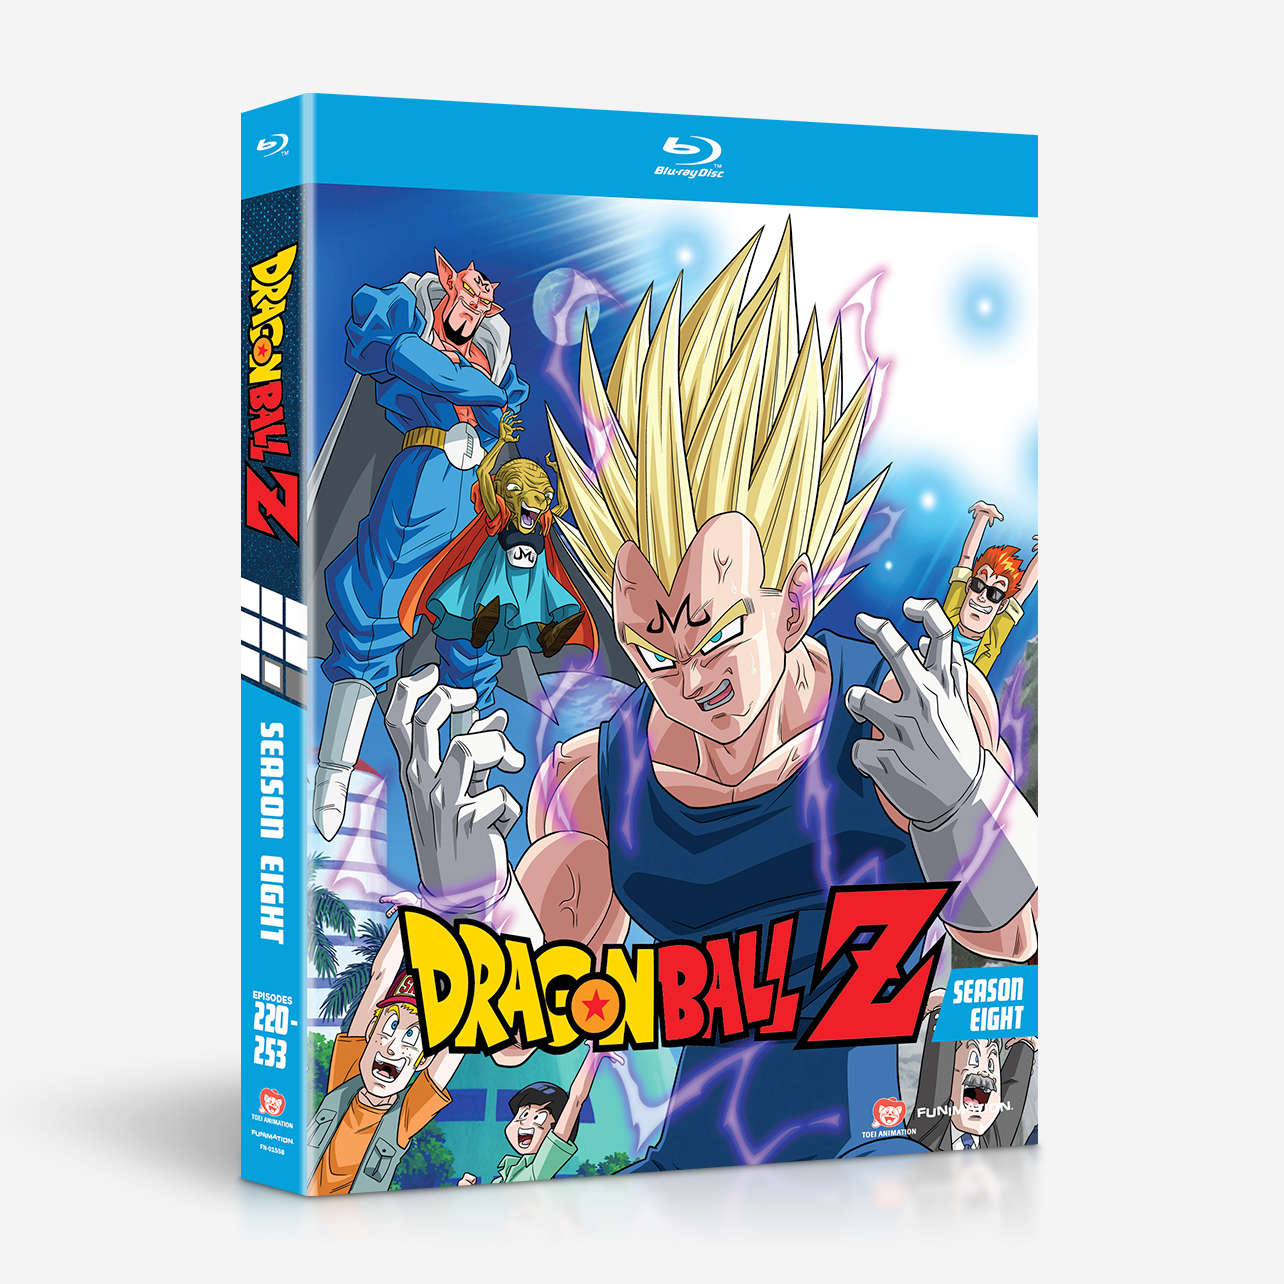 Shop Dragon Ball Z Season Eight | Funimation